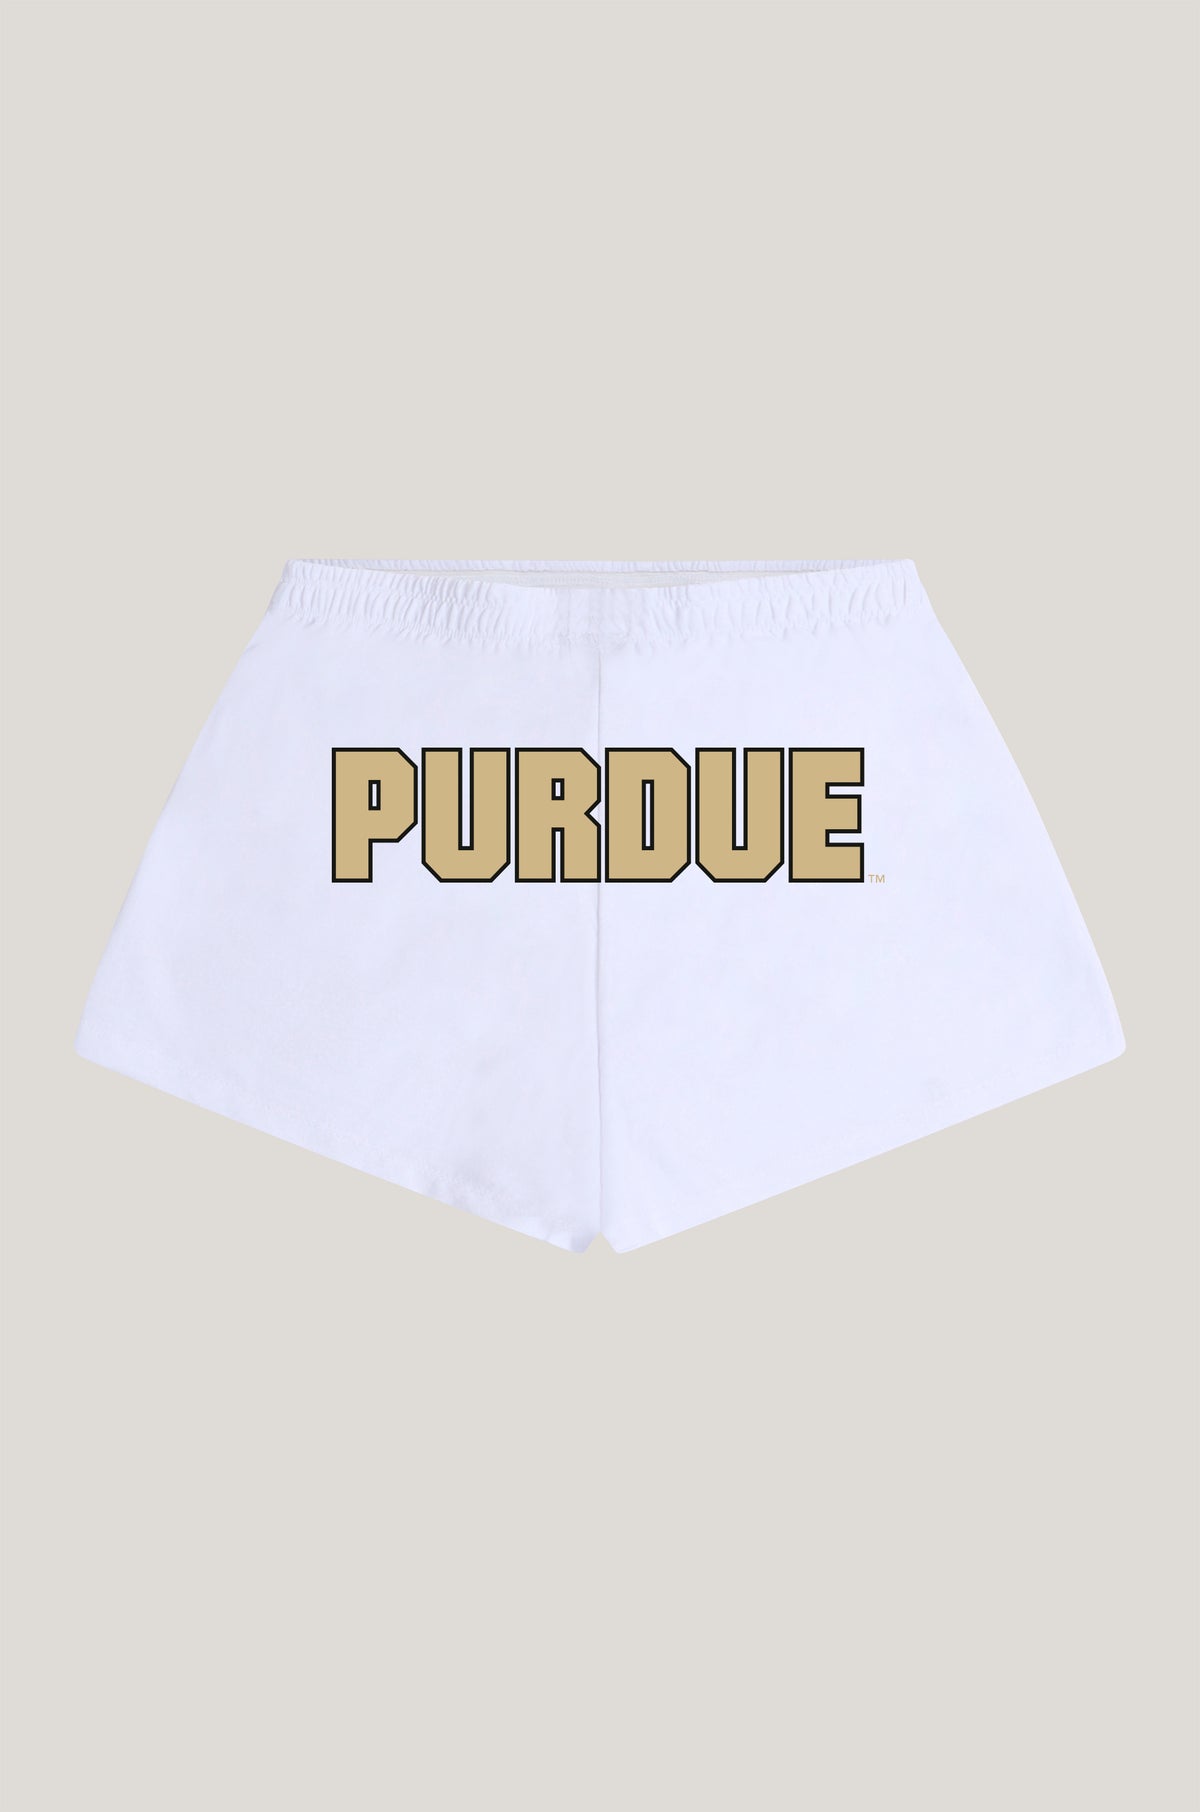 Purdue P.E. Shorts